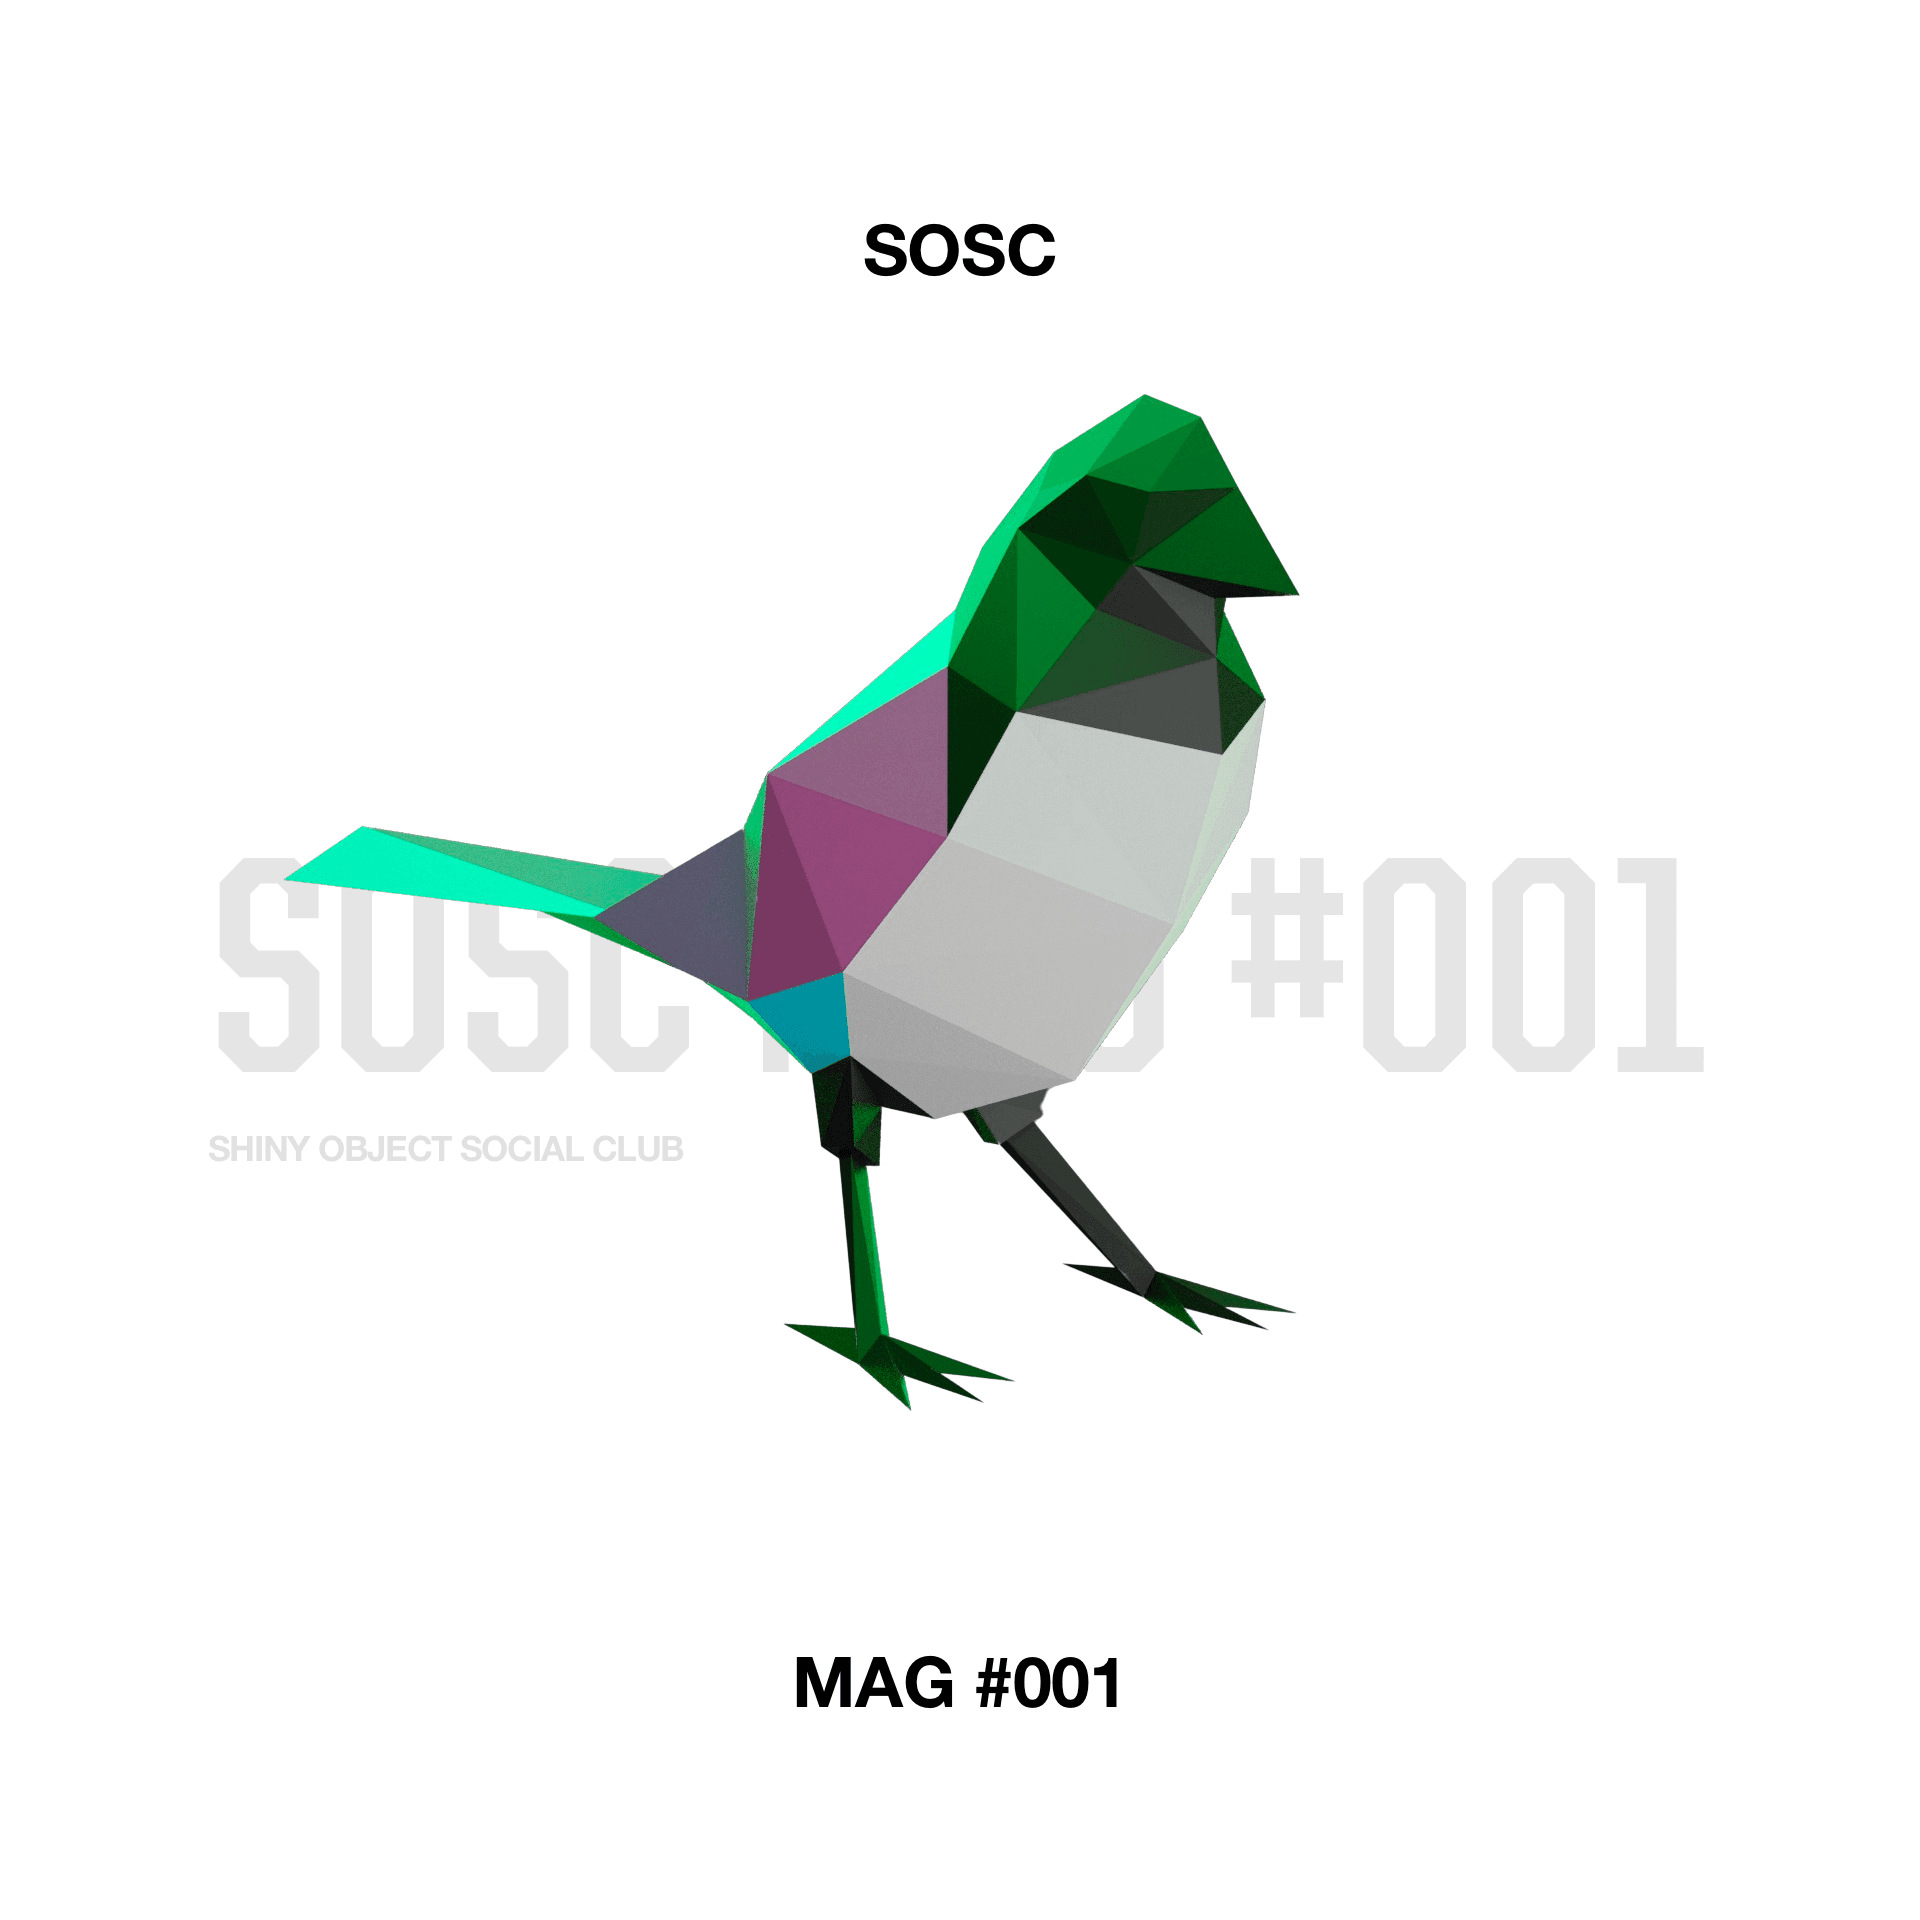 MAG #001